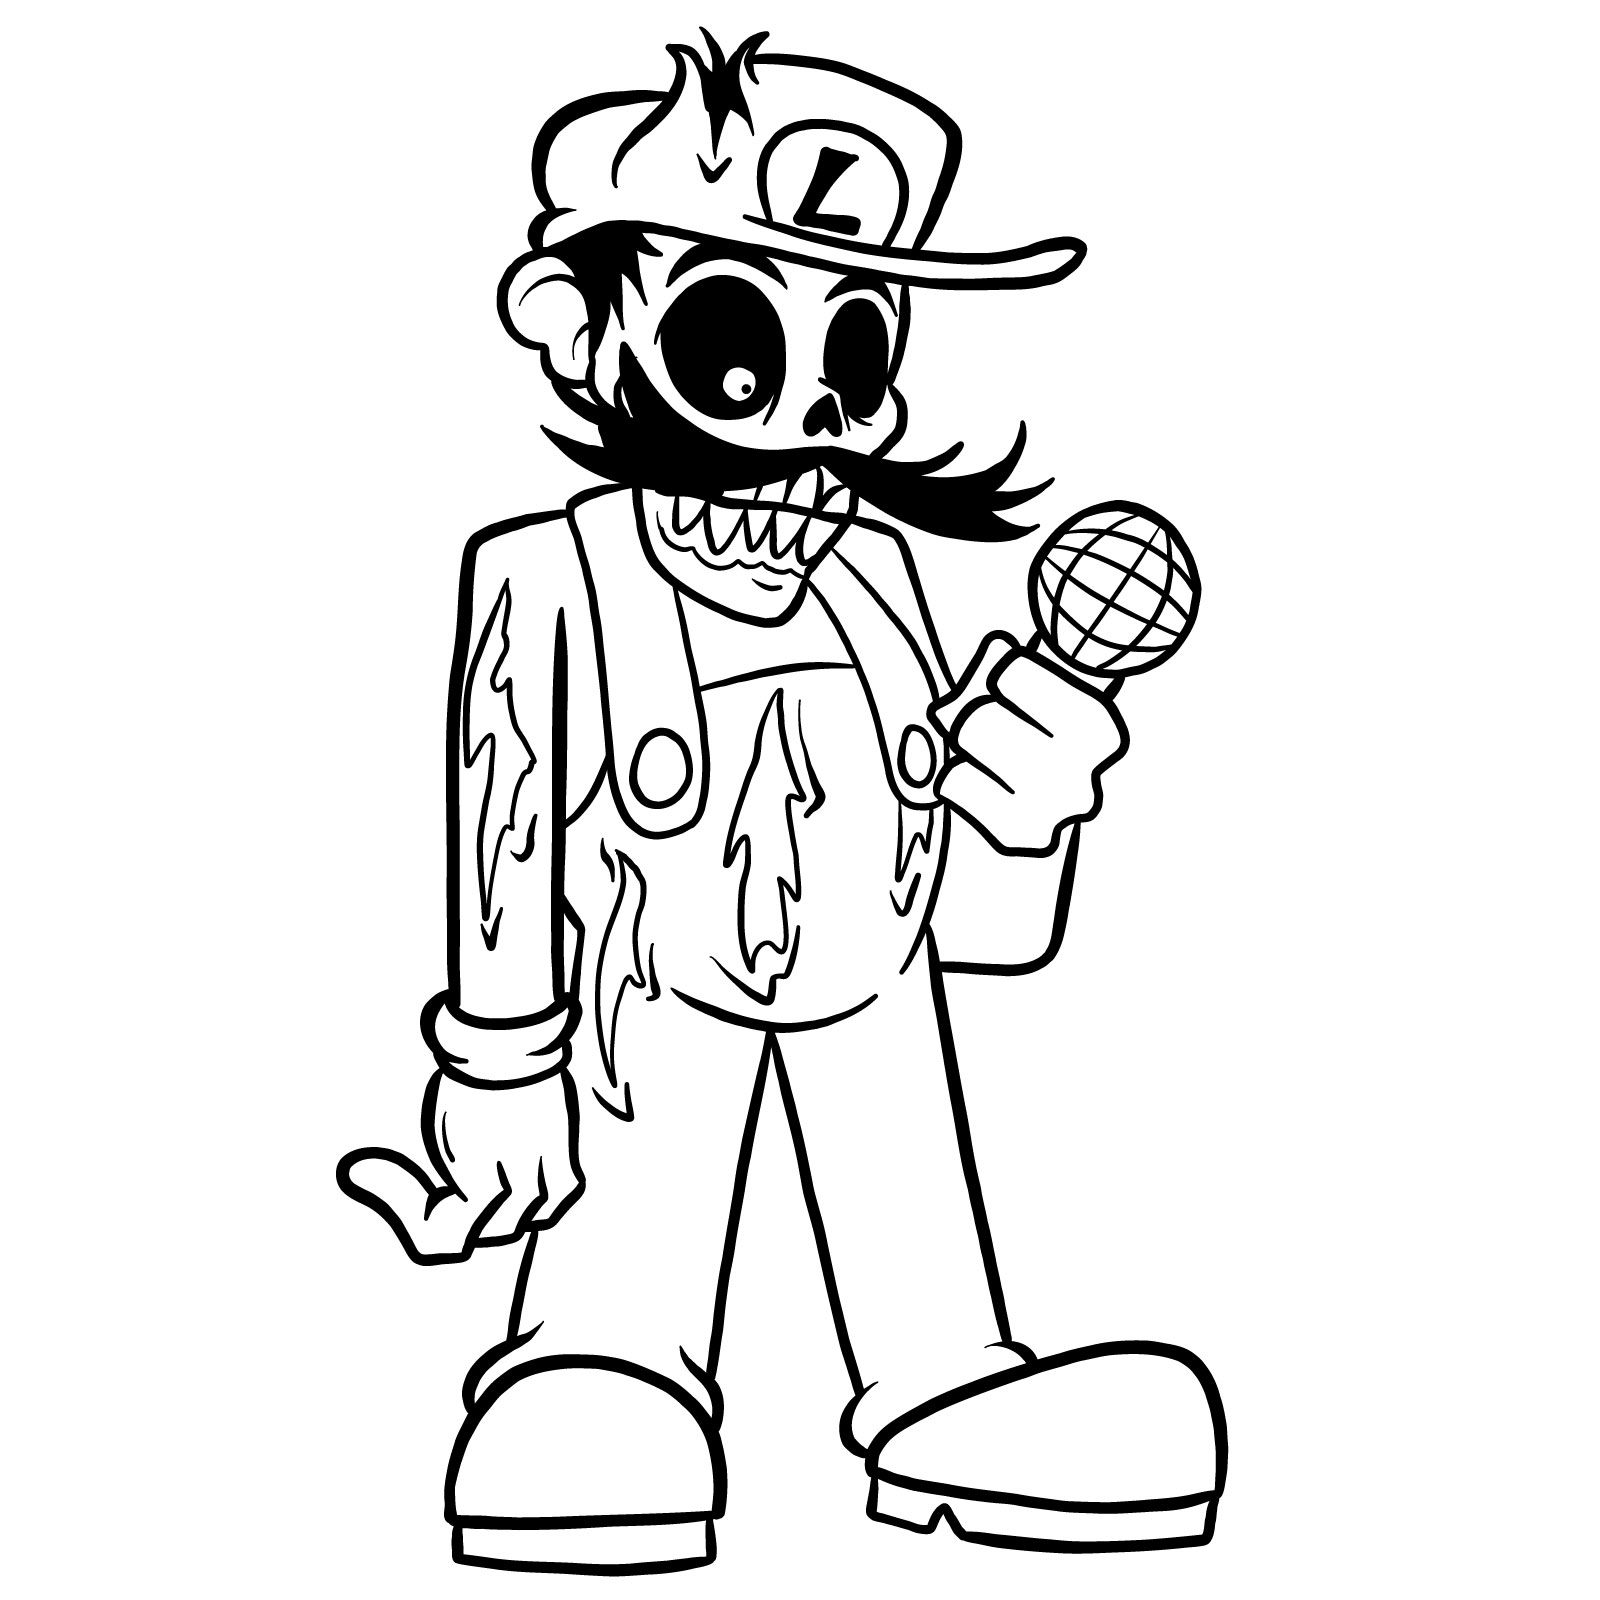 How to draw I HATE YOU Luigi - final step